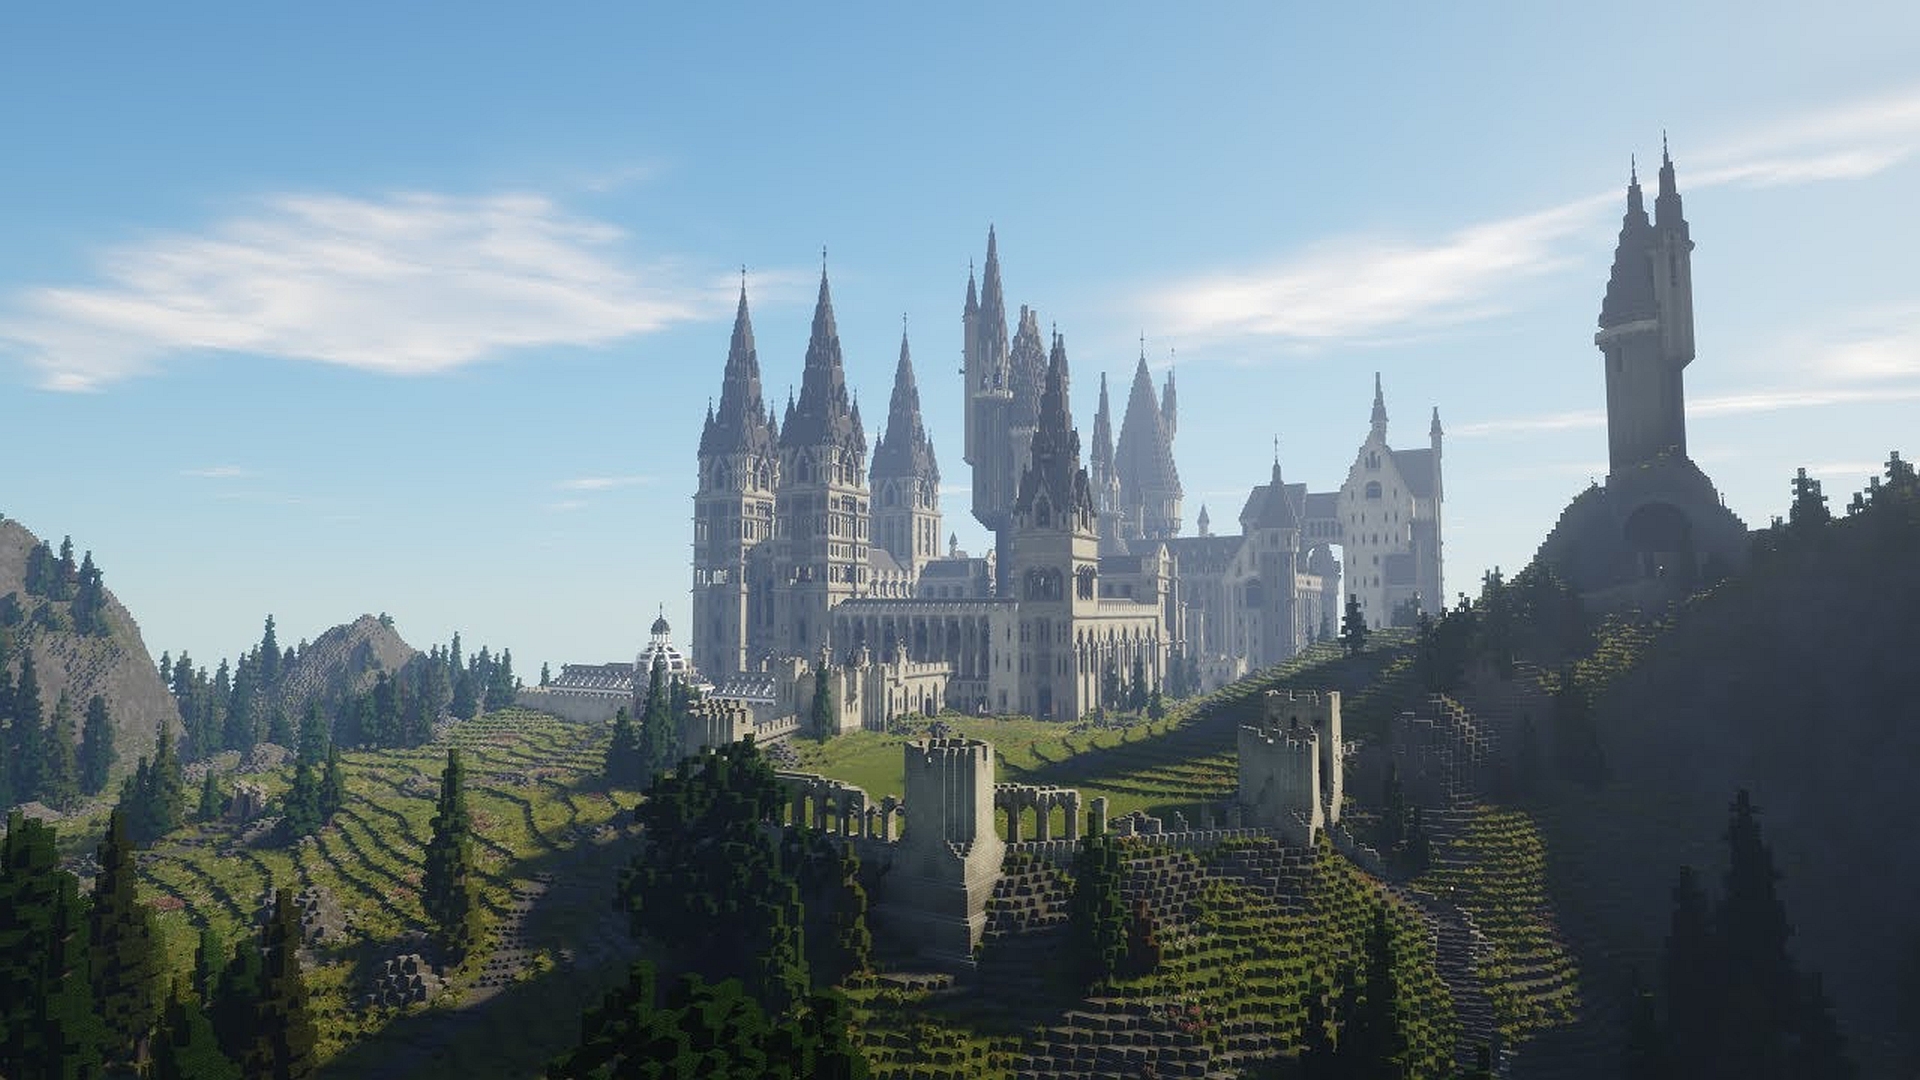 Harry Potter’s wonderful world carefully recreated in Minecraft